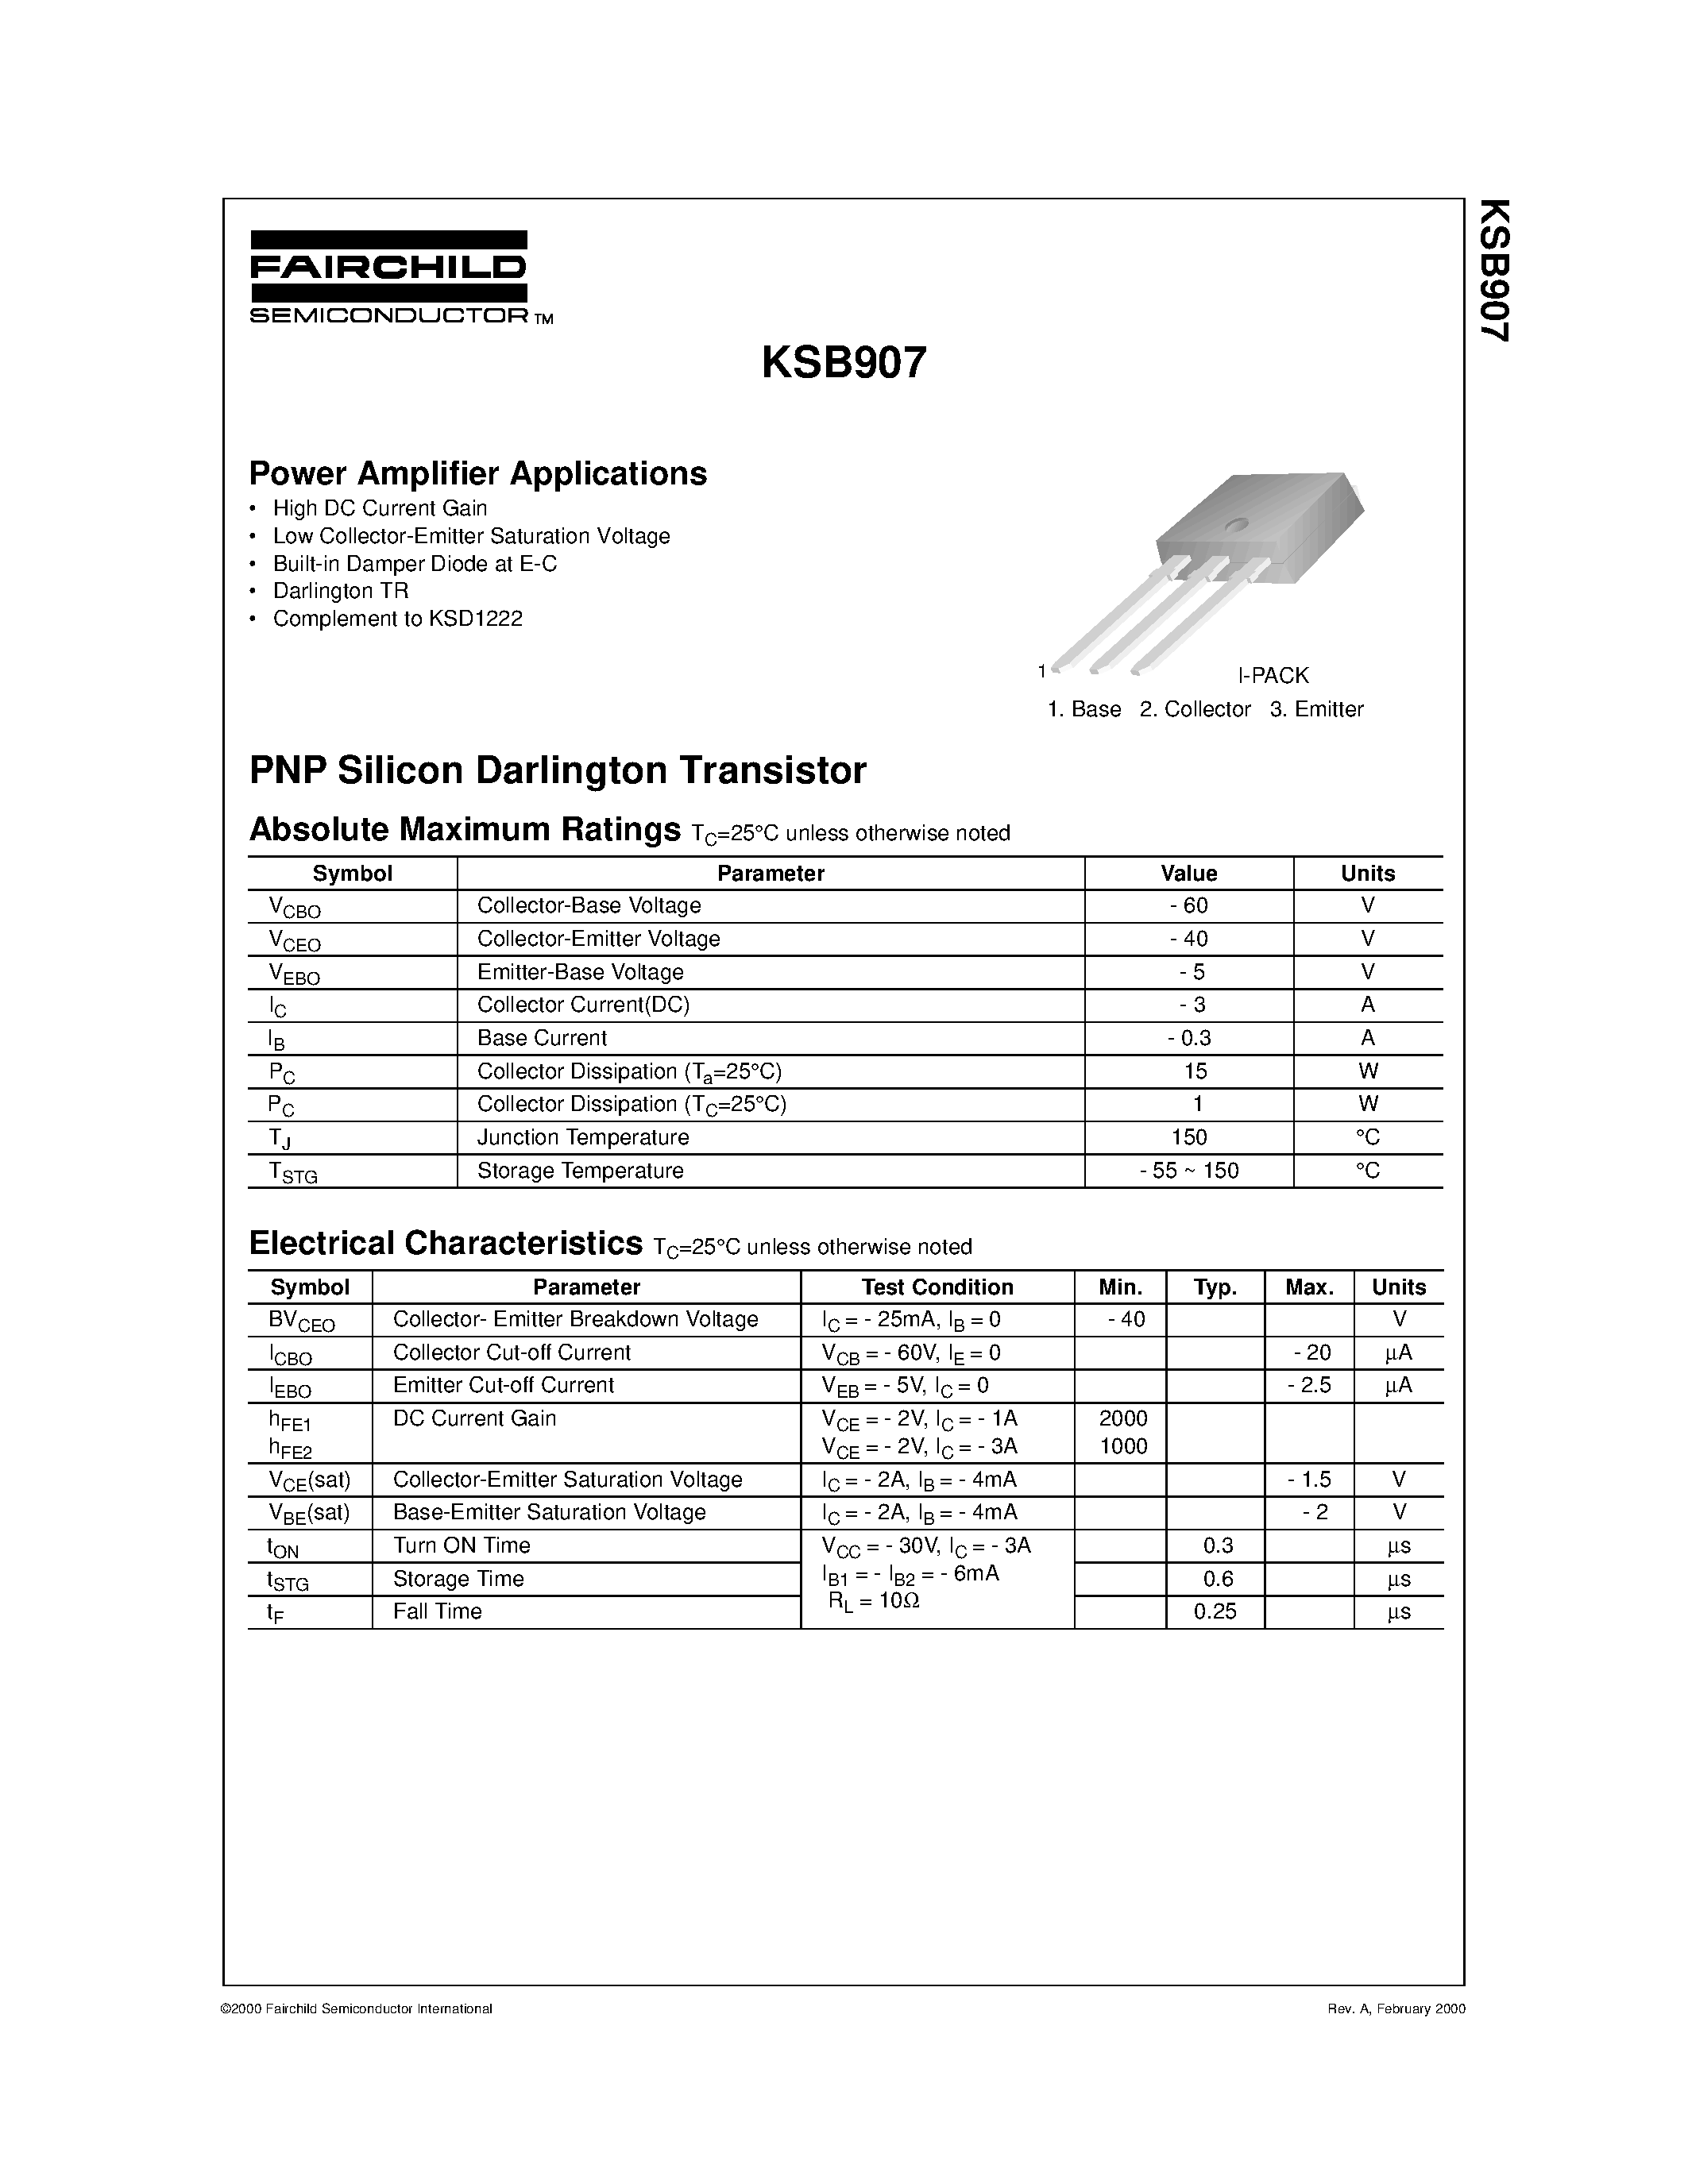 Datasheet KSB907 - Power Amplifier Applications page 1